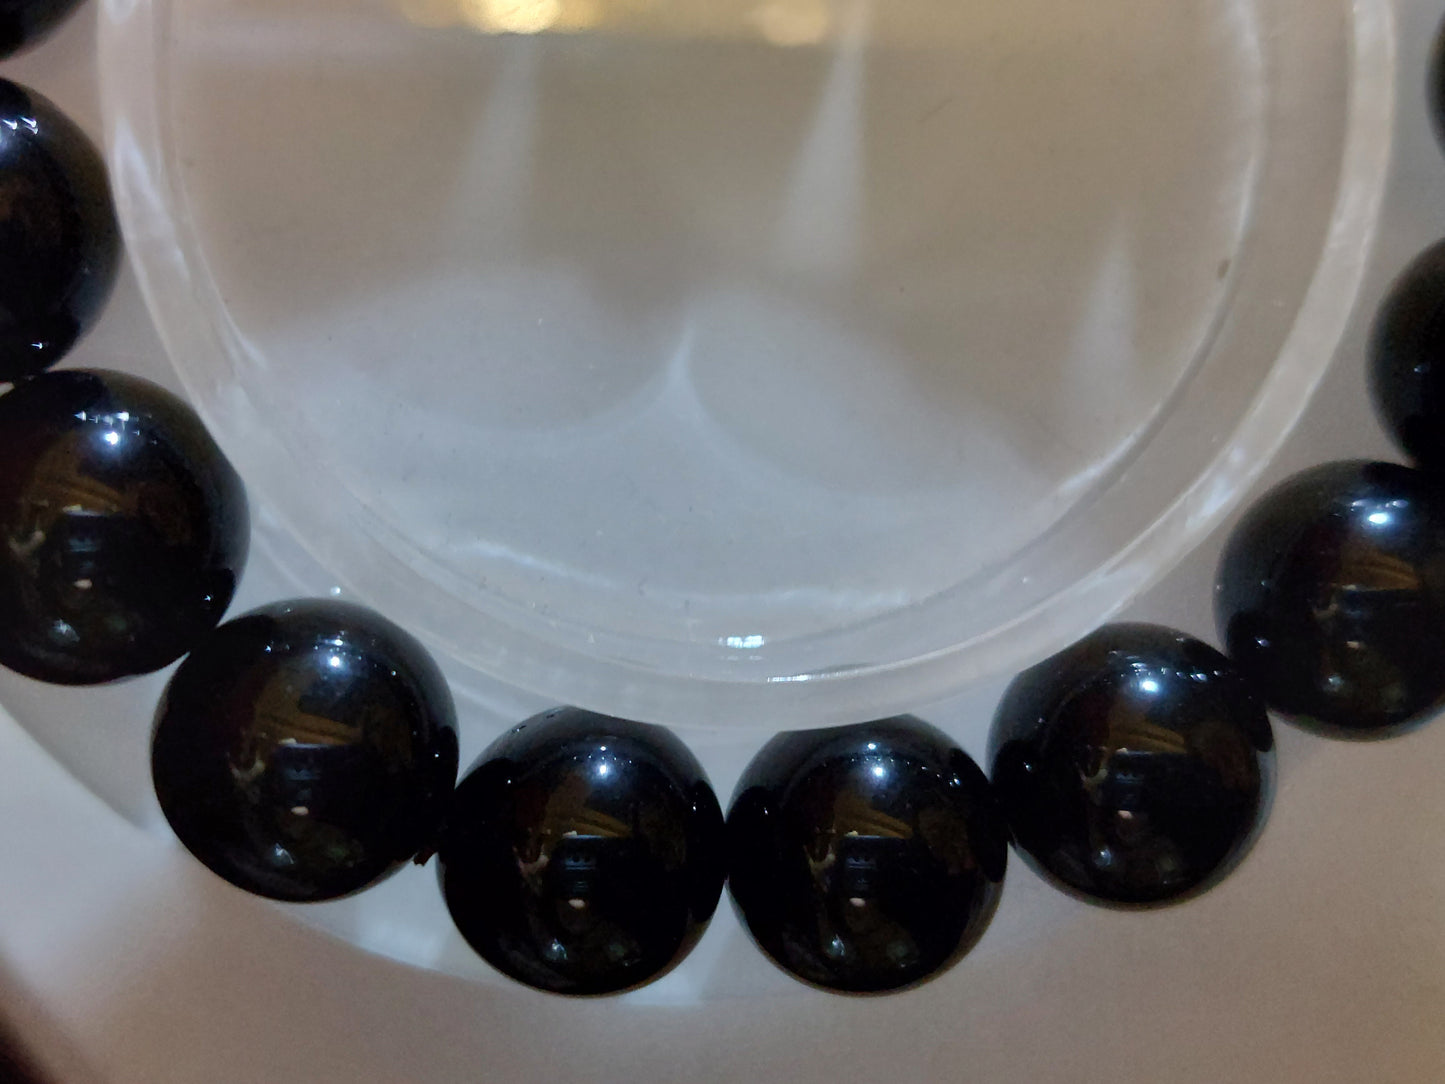 obsidian bracelet